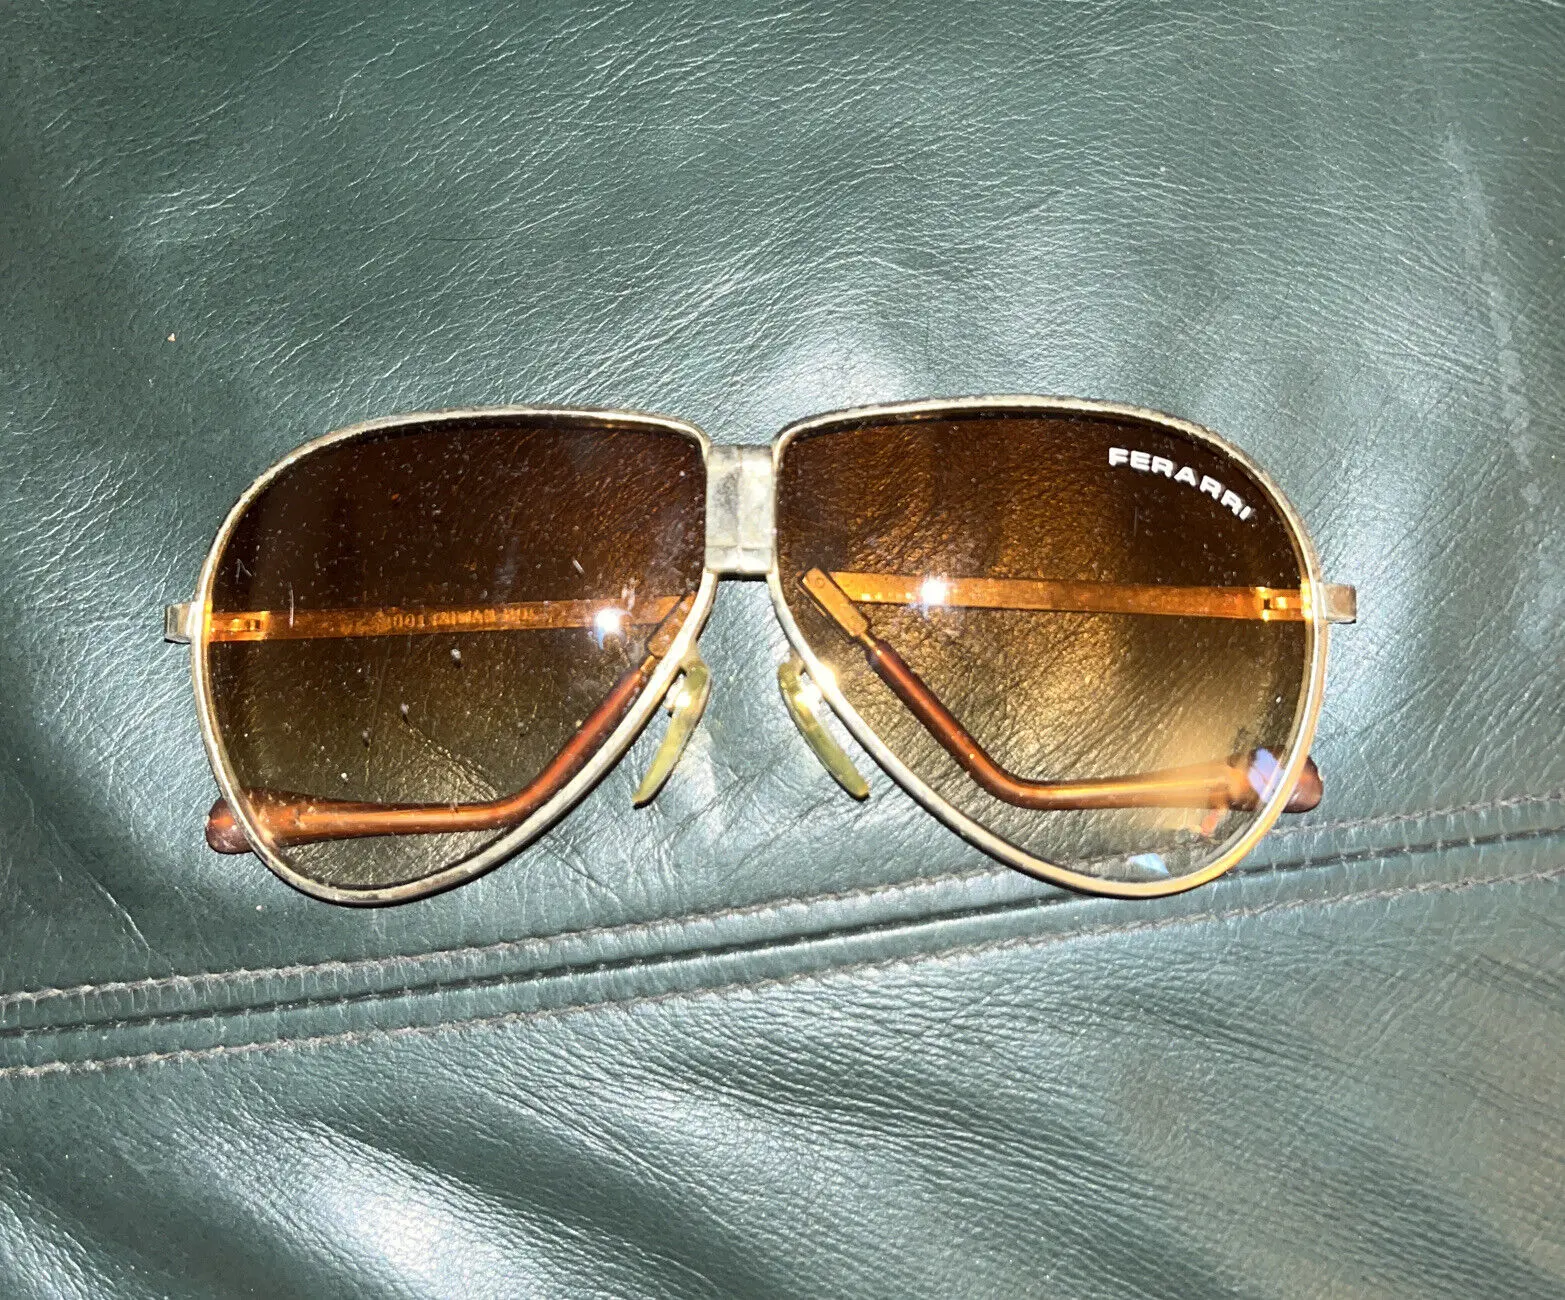 ferrari folding sunglasses - What kind of sunglasses did Matt Damon wear in Ford vs Ferrari